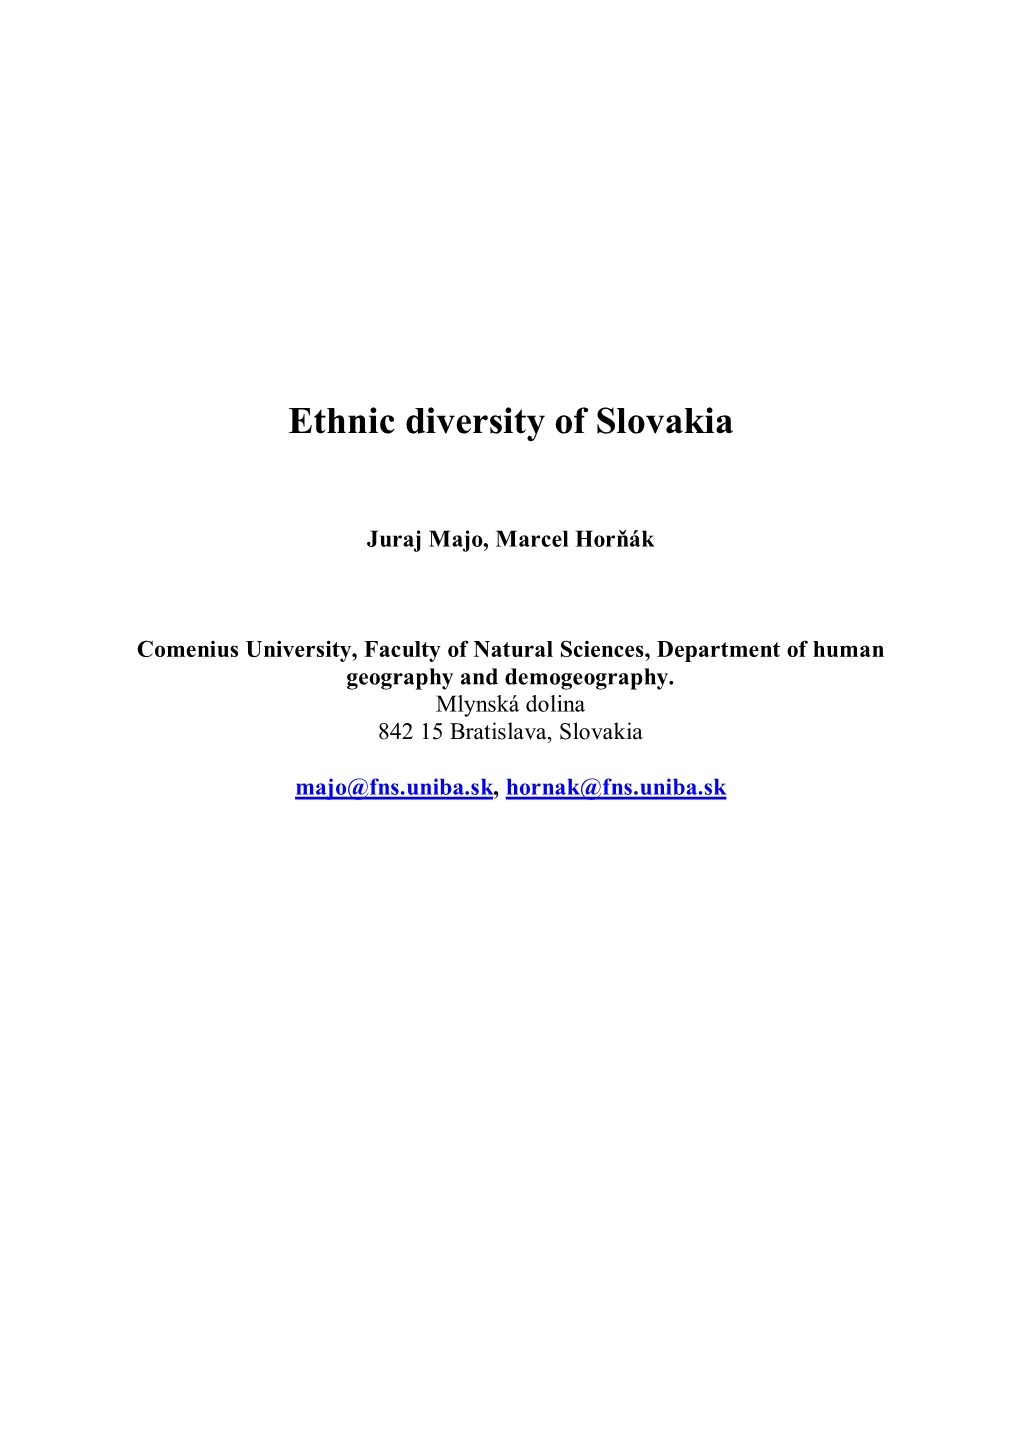 Ethnic Diversity of Slovakia